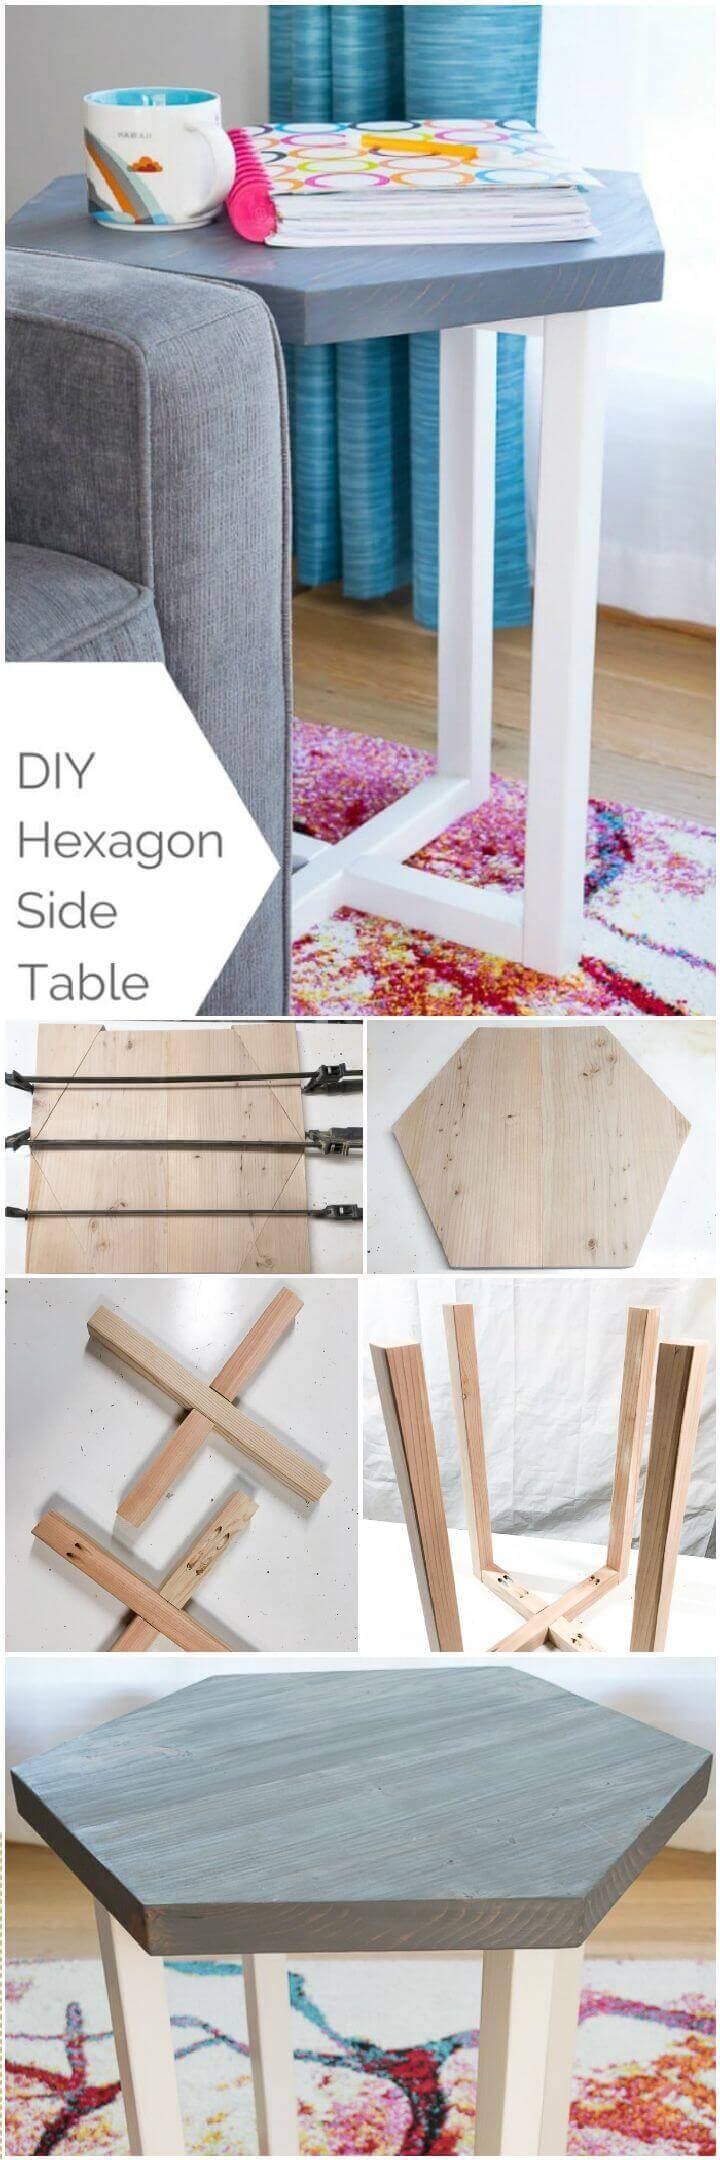 DIY Hexagon Side Table